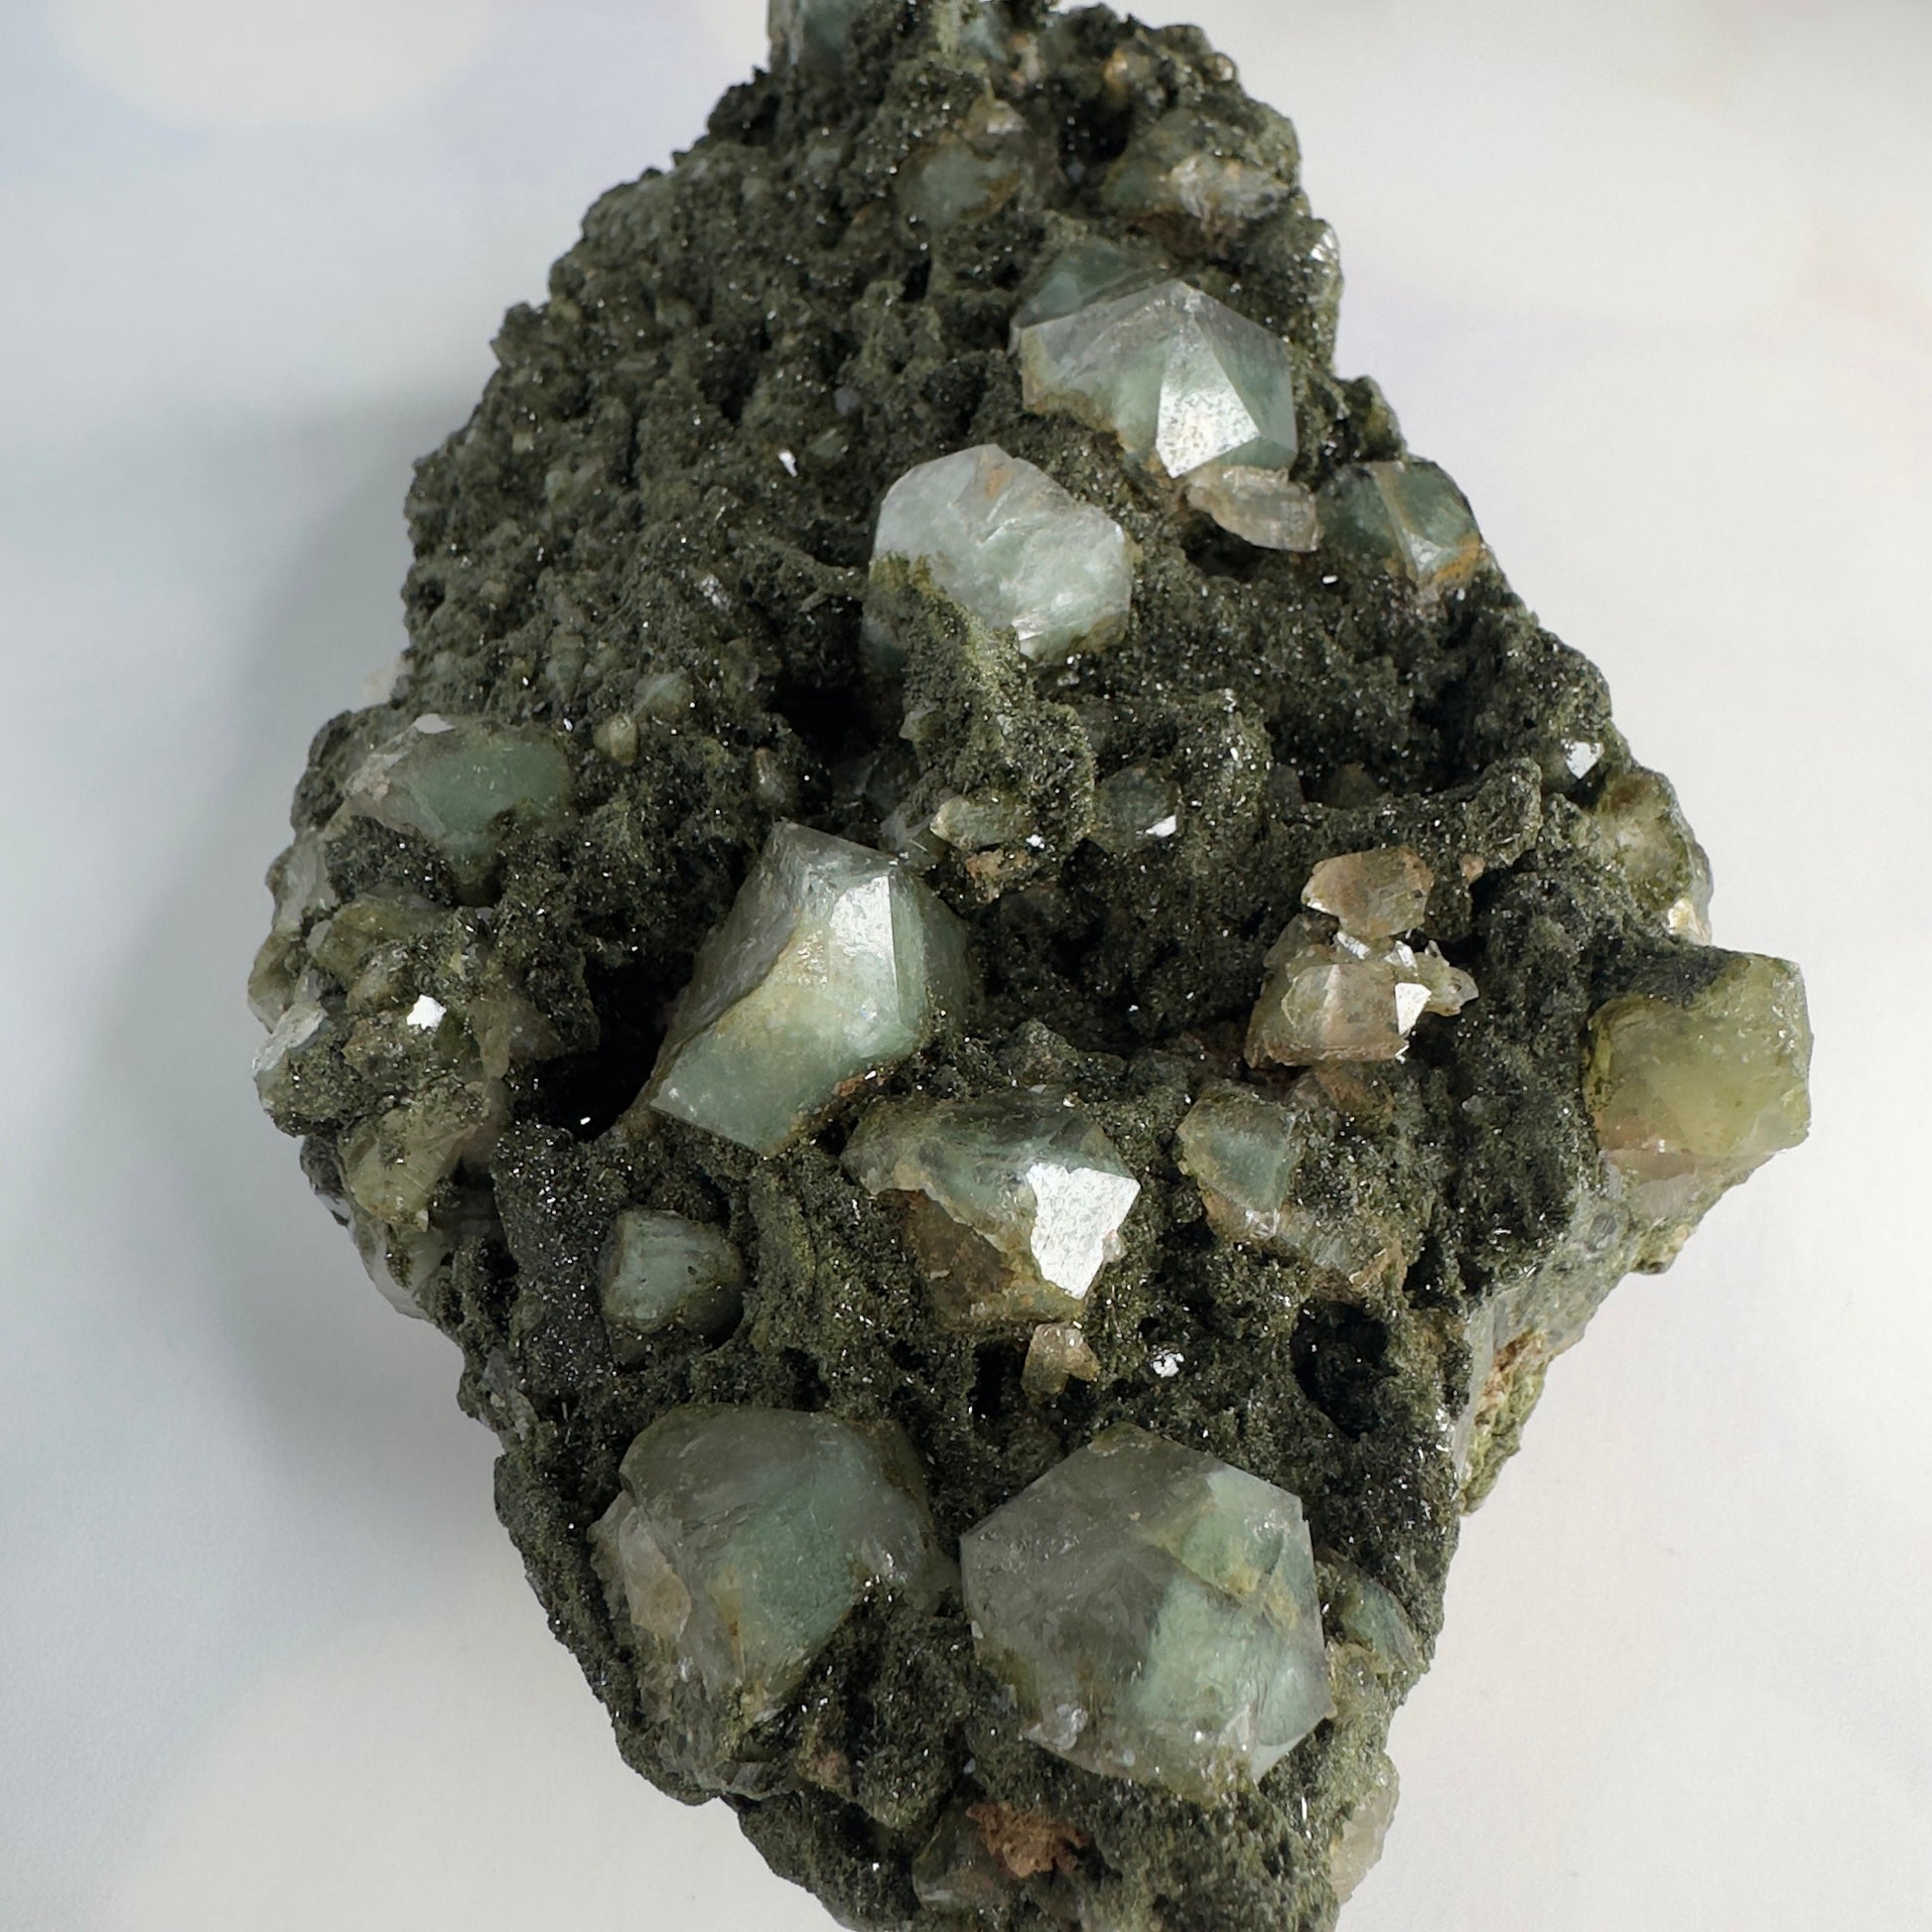 Amazing Epidote On Quartz With Phantoms Genuine Dark Green Crystal Cluster Specimen From Turkey | Tucson Gem Show Exclusive